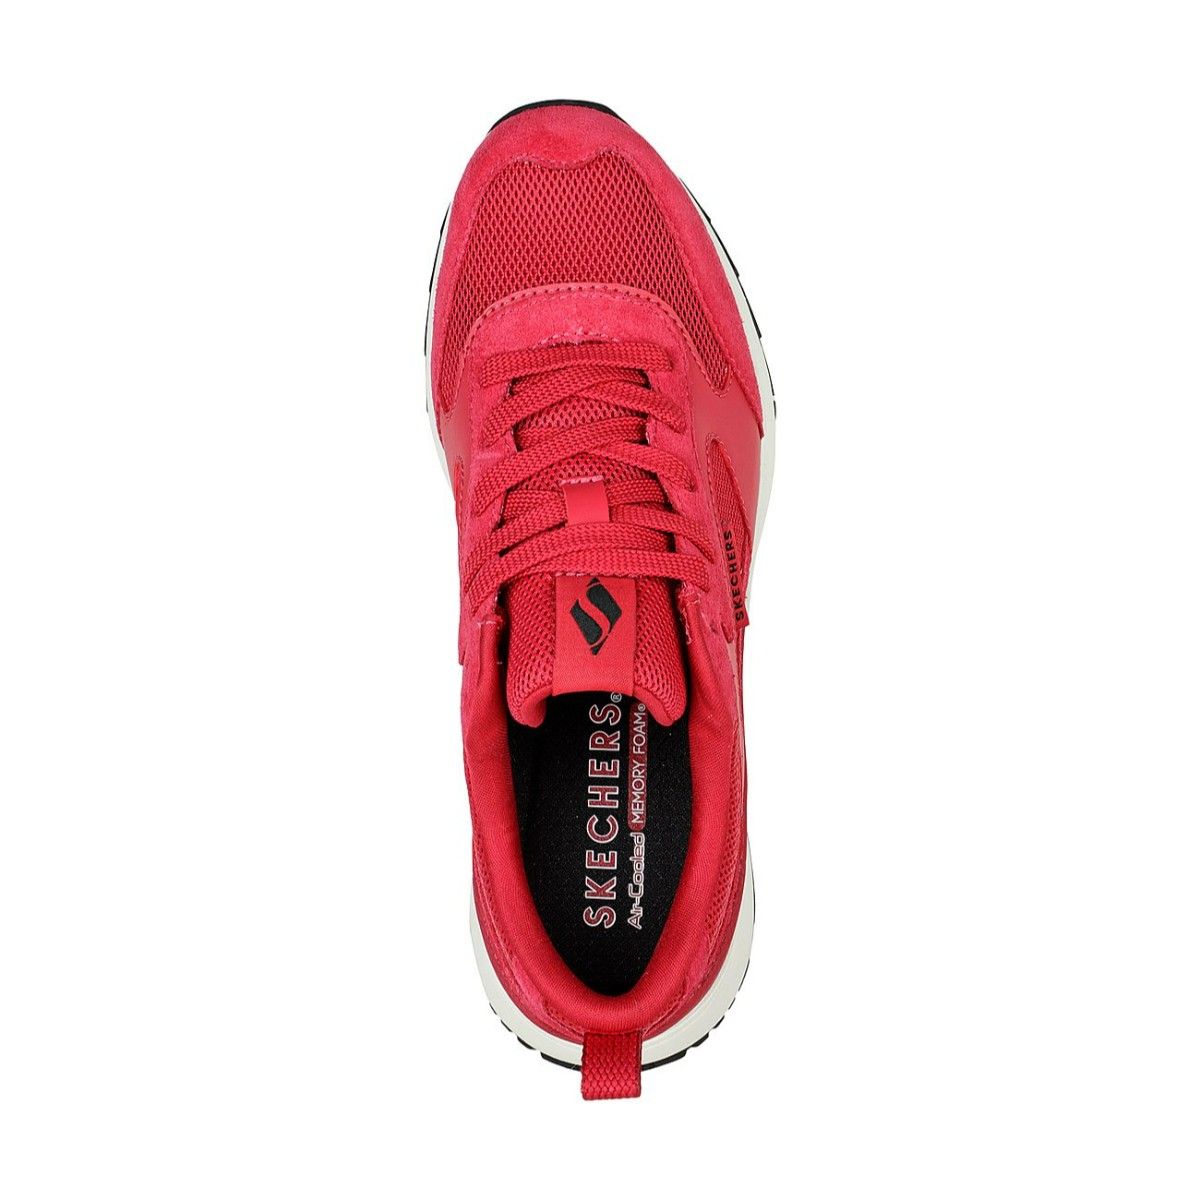 Buy SKECHERS Sunny Street - Primary Red Sneakers Online